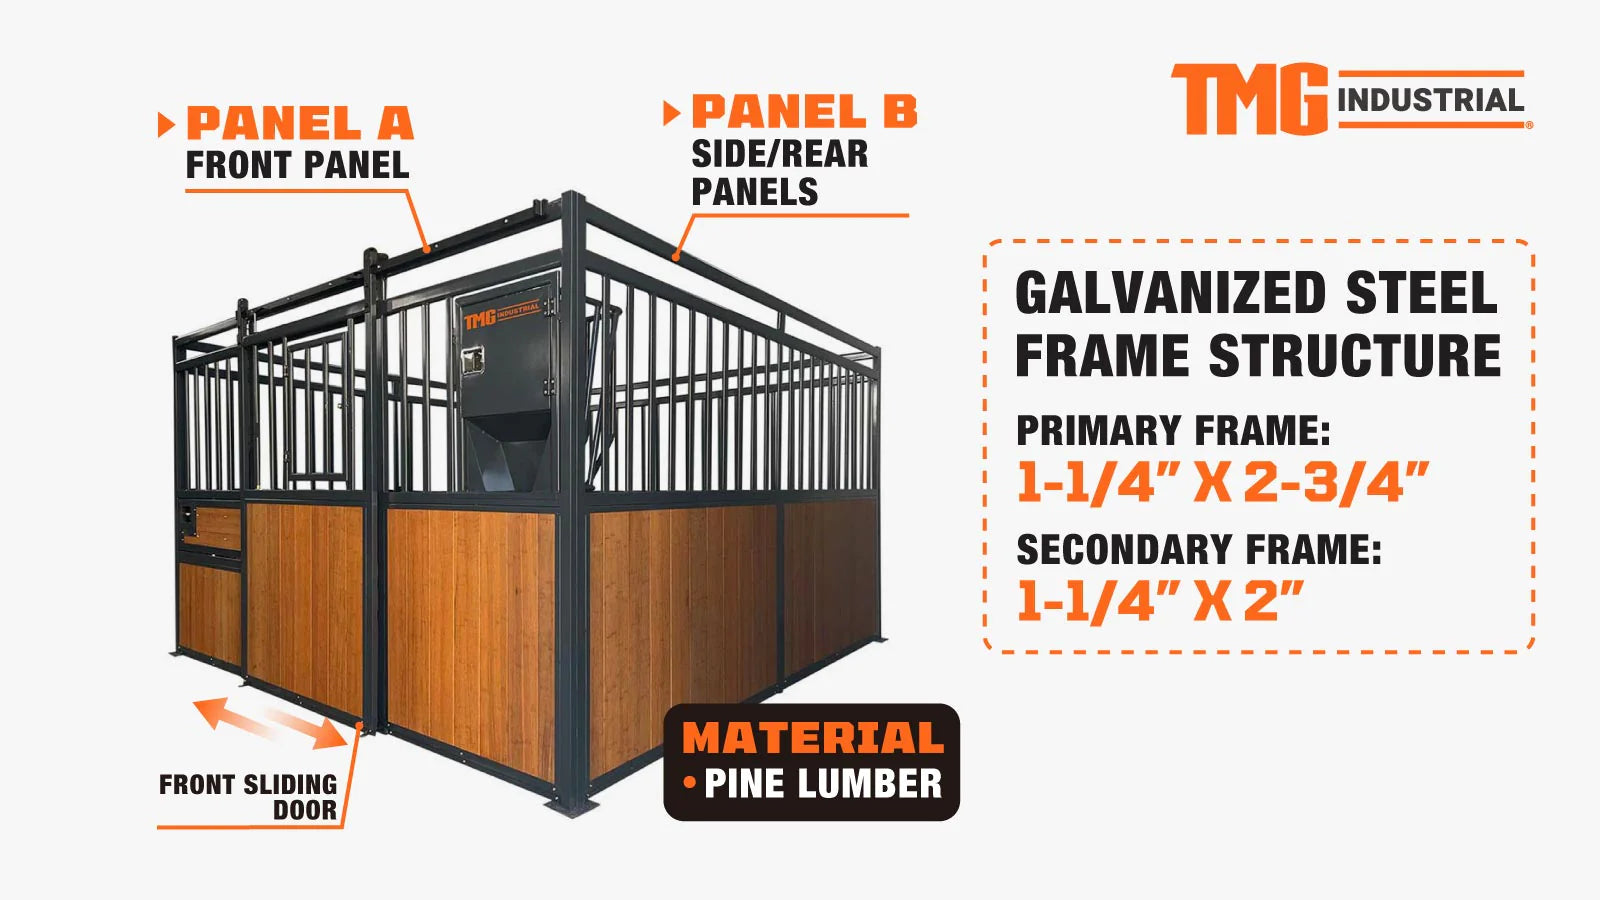 TMG Industrial 12’ x 12’ Horse Stall Set w/Pine Lumber Boards, Vertical Bar Top & Wood-Filled Bottom, Window/Feeder Opening, Front Sliding Door, TMG-FHS12-description-image